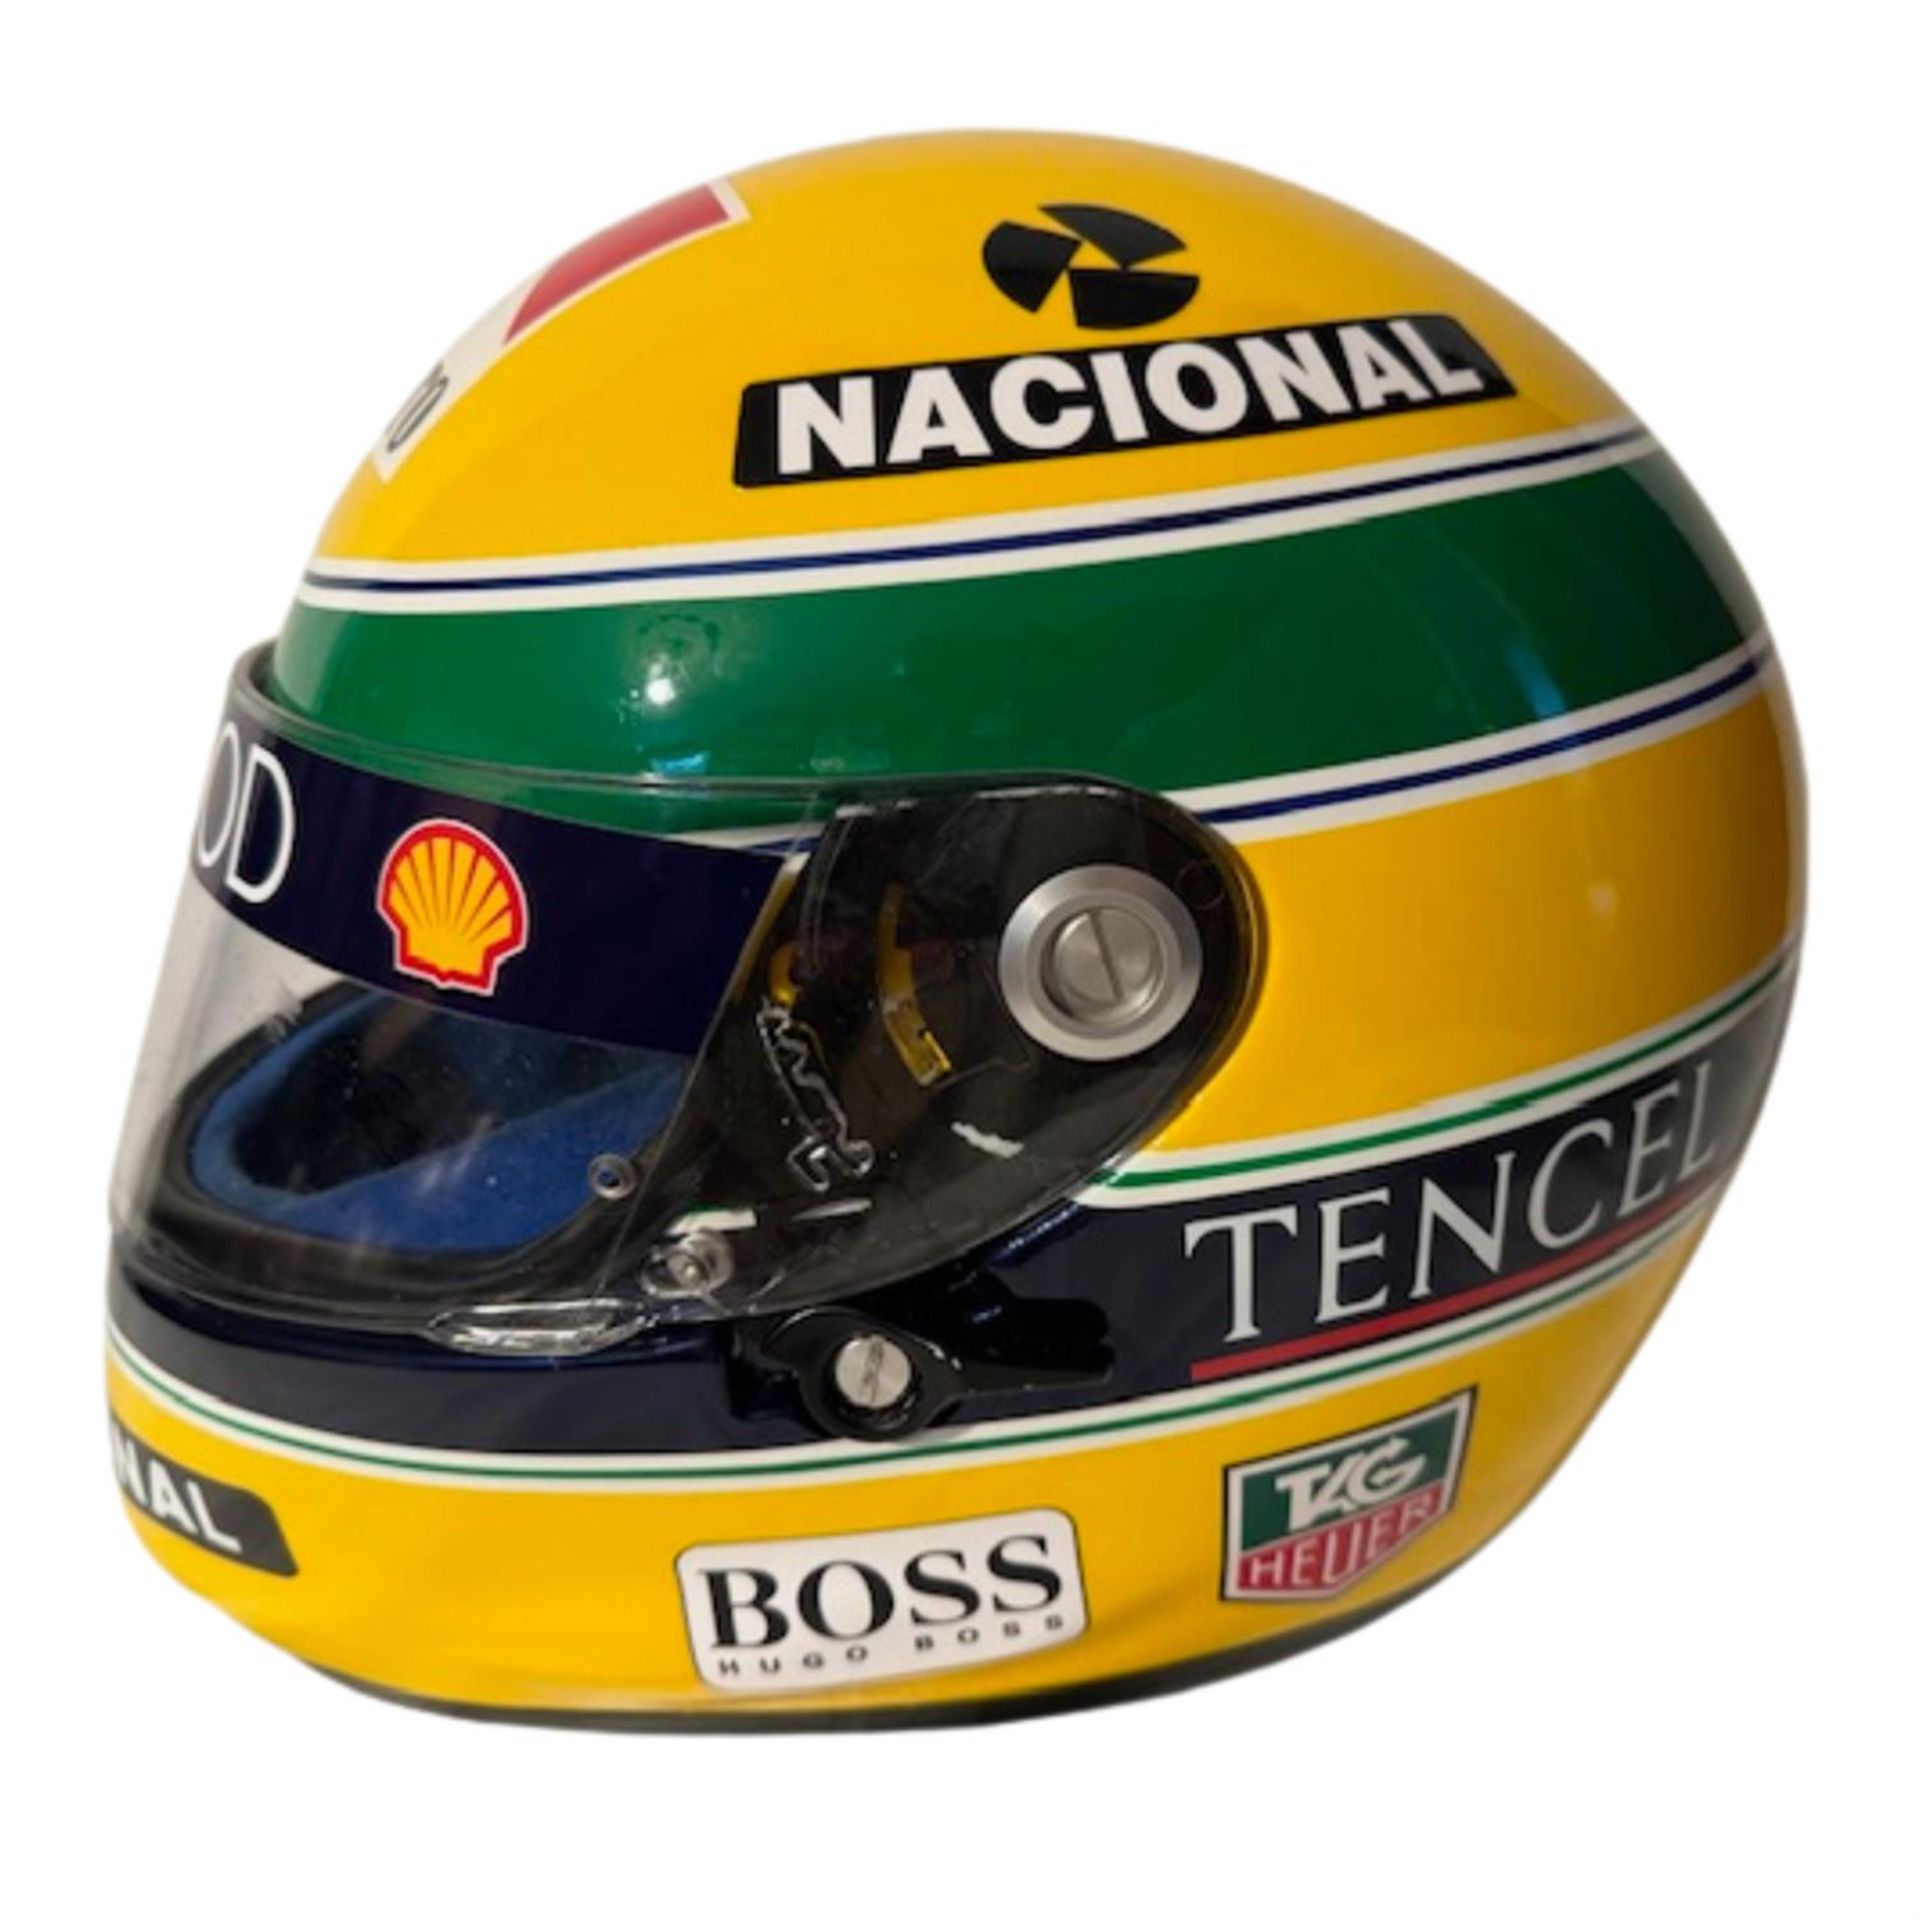 Replica Ayrton Senna Helmet Produced in 1993 by Shoei - Image 2 of 10